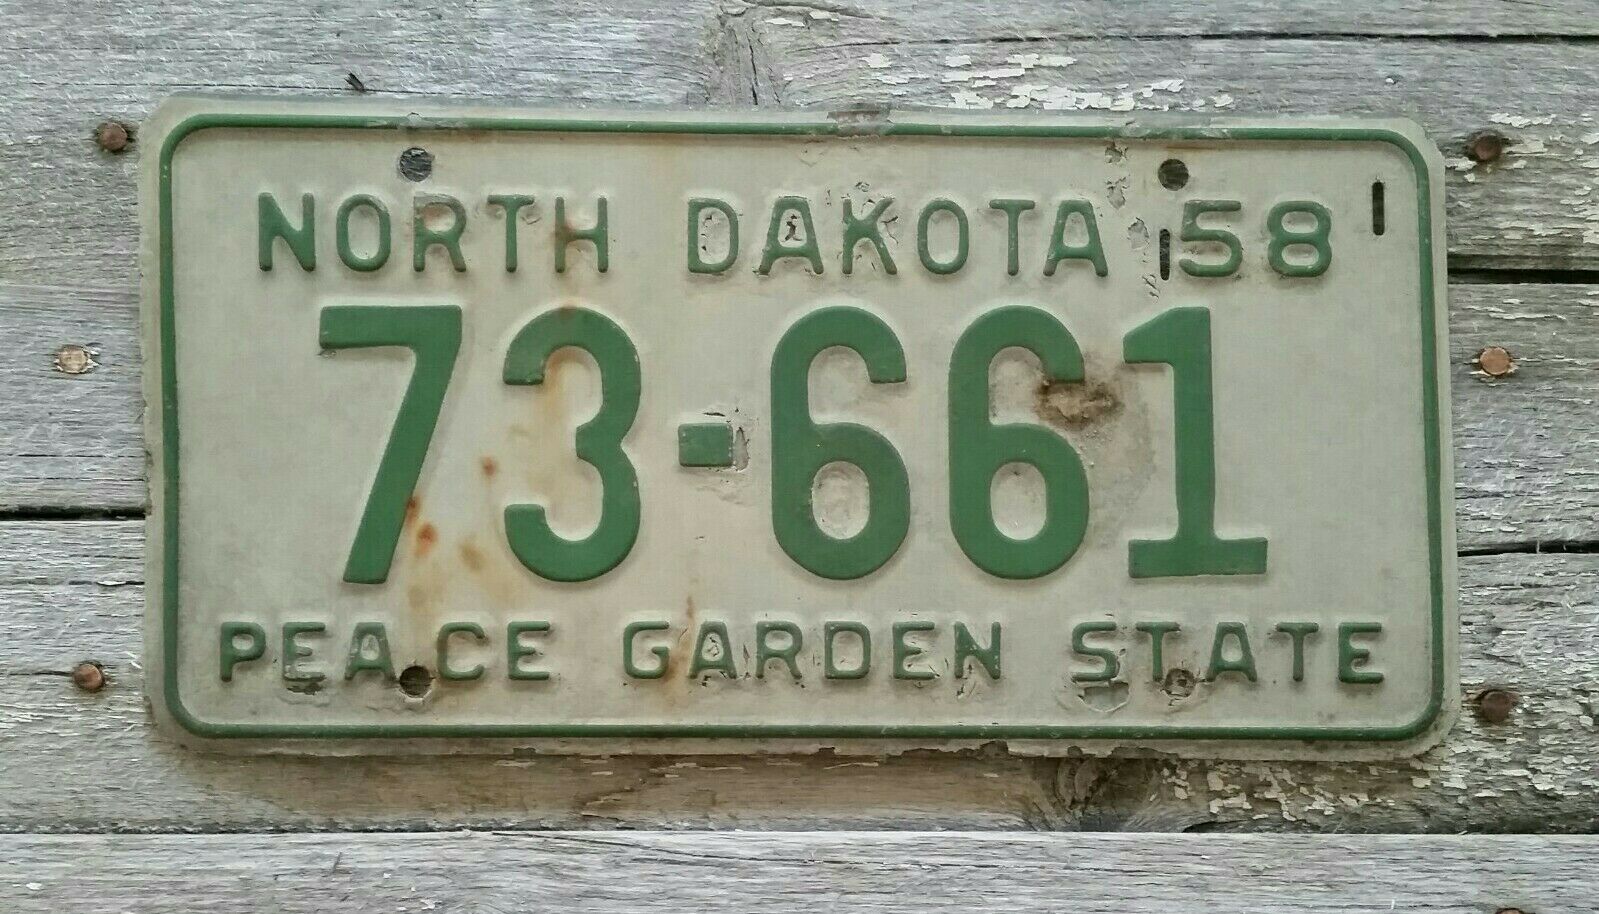 1958 # 73-661 North Dakota License Plate Peace Garden State, Green, Vintage